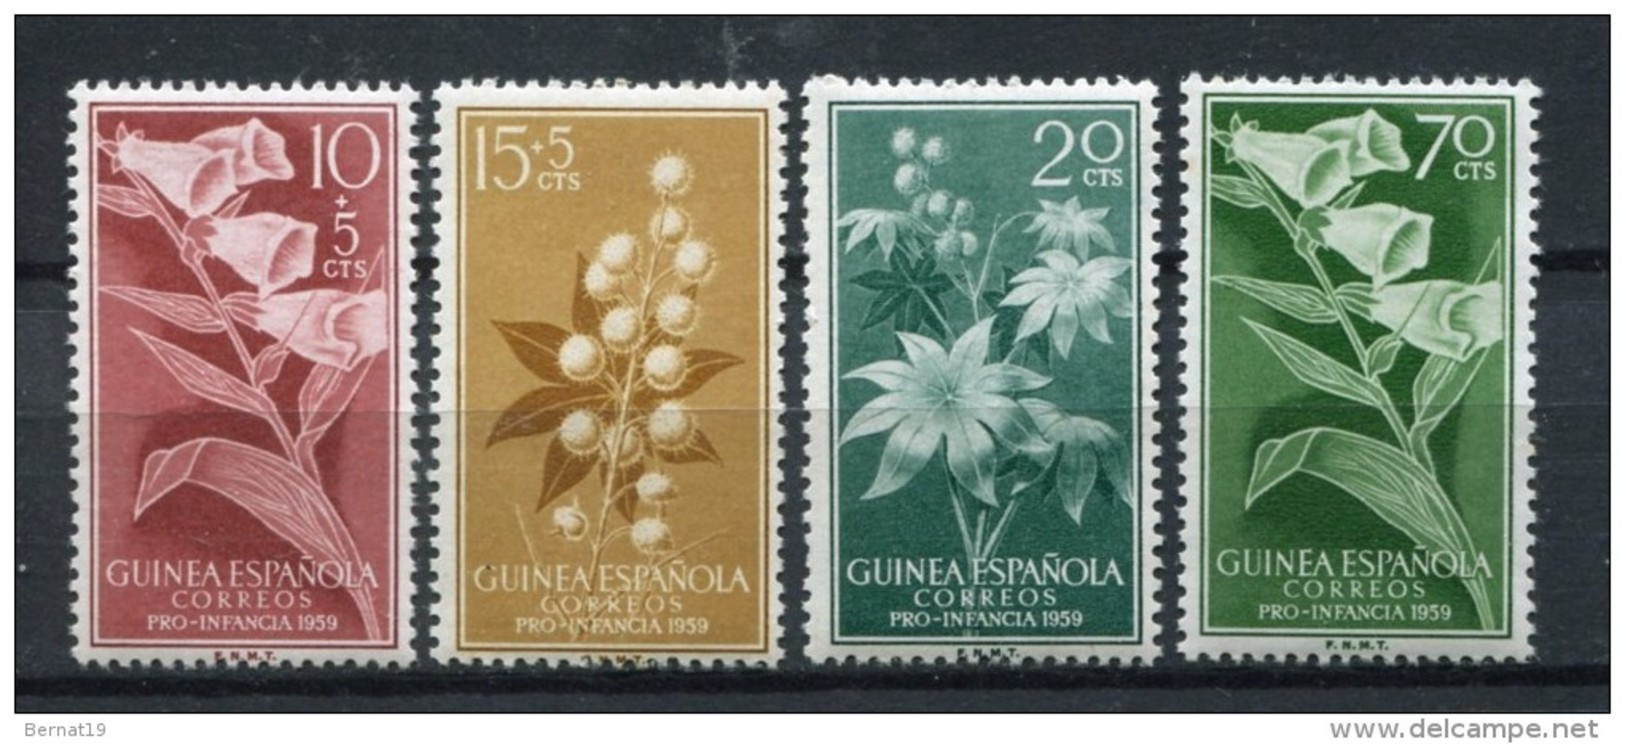 Guinea Española 1959. Edifil 391-94 ** MNH. - Guinée Espagnole